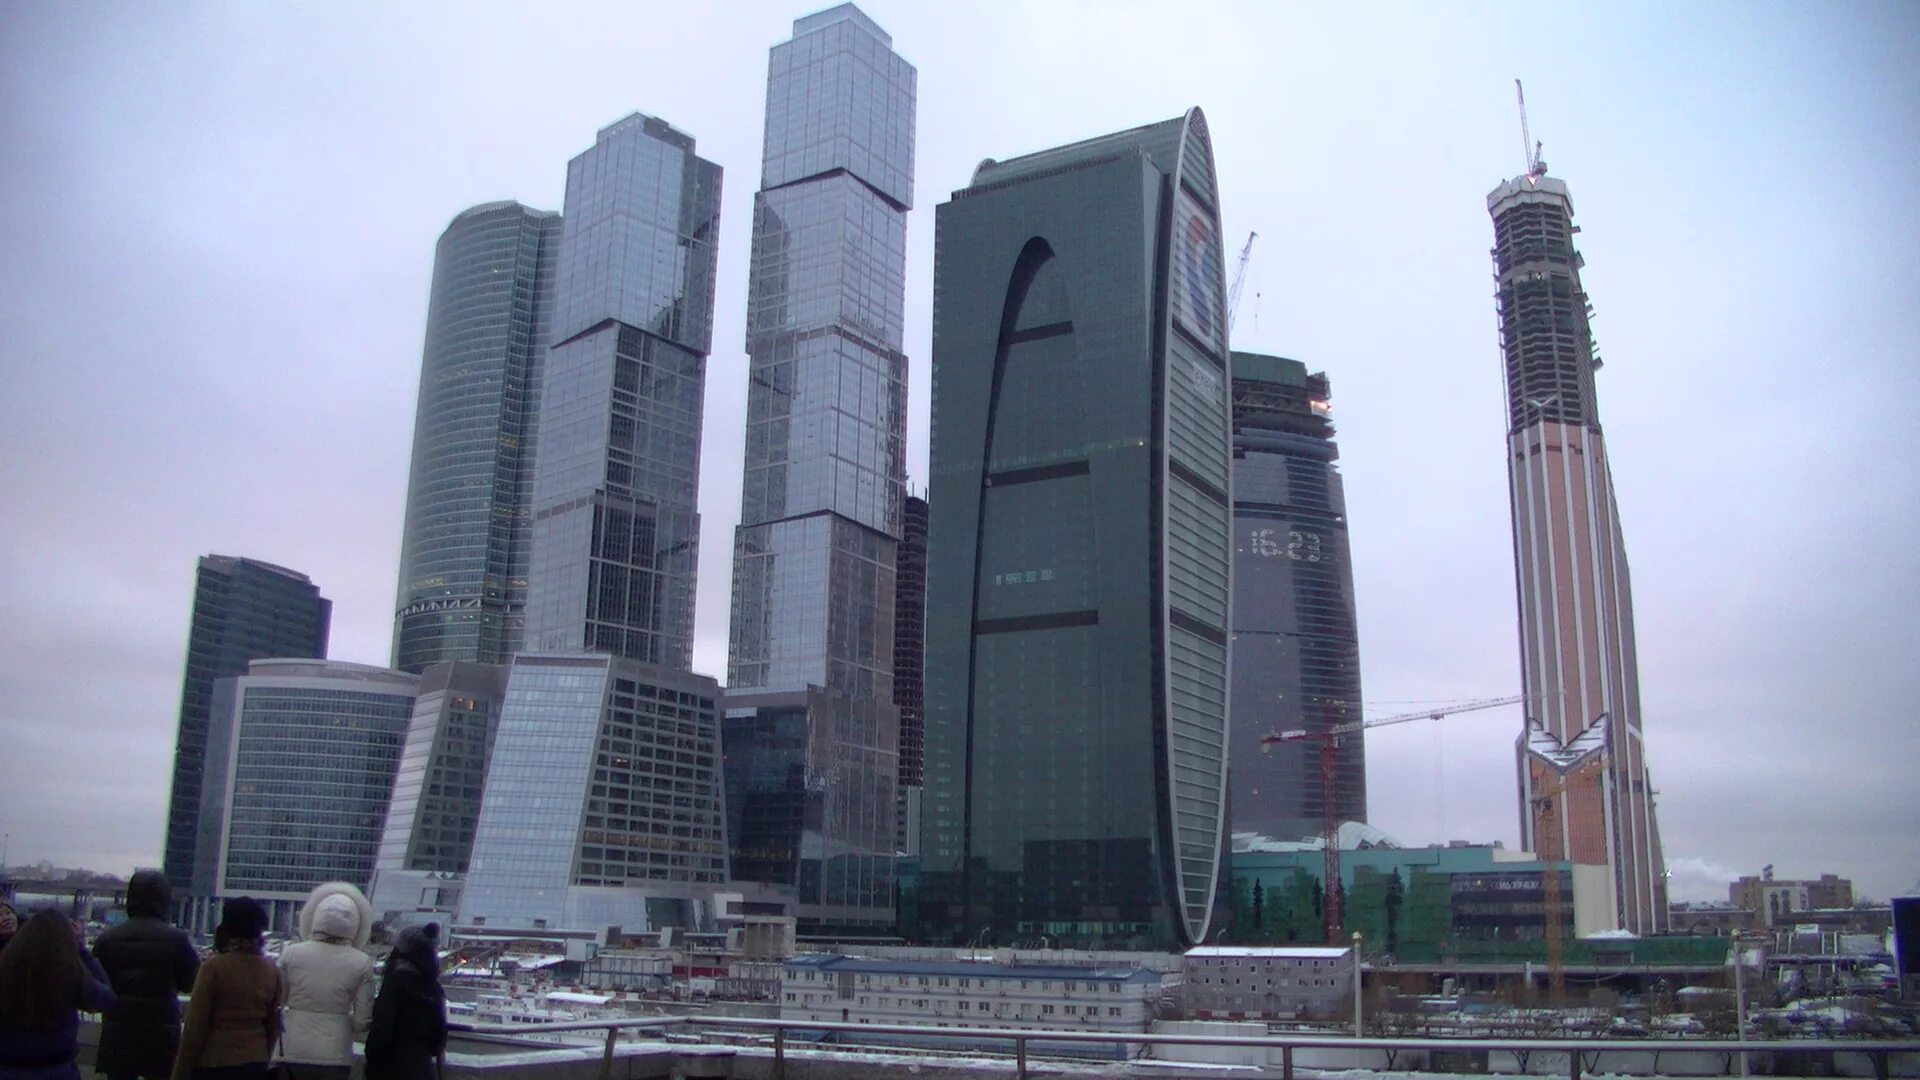 Семь башен. Башня око Москва Сити. Город семи башен. Семь башен Москвы.